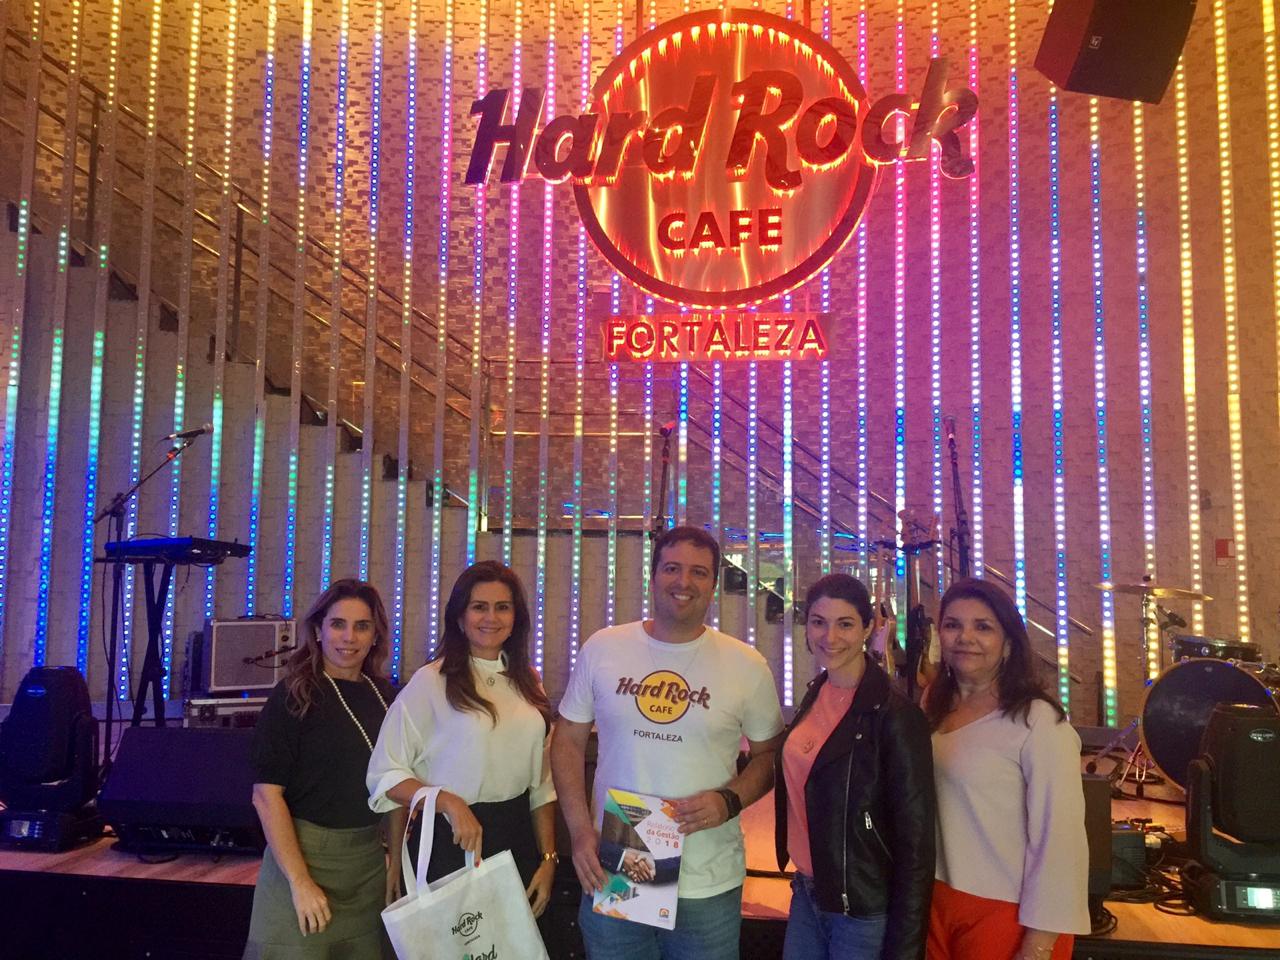 Executivos do Hard Rock Cafe Fortaleza e do Convention & Visitors Bureau Ceará discutem parceria para estimular turismo cearense